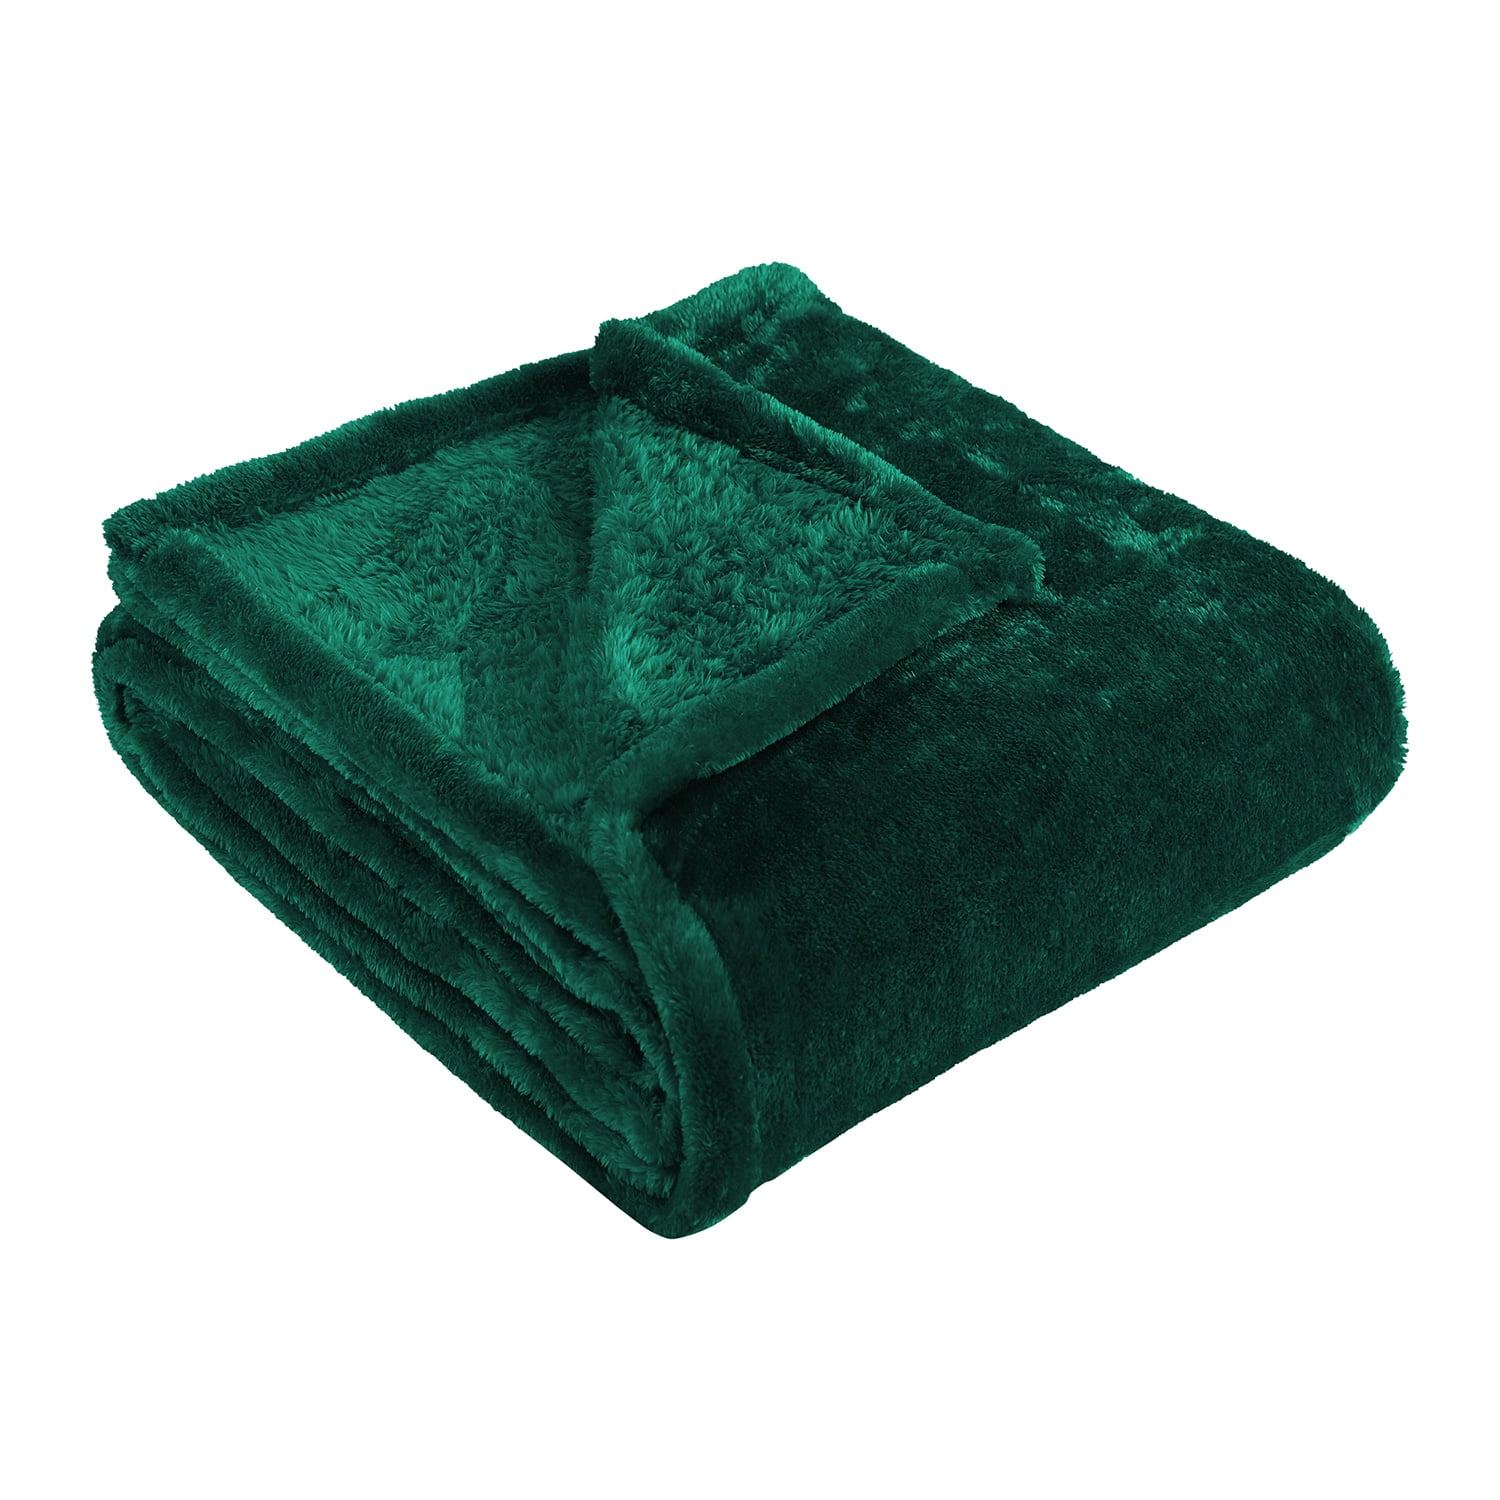 Ultra-Soft Luxury Fleece Blankets, Lightweight Super Soft Cozy Warm